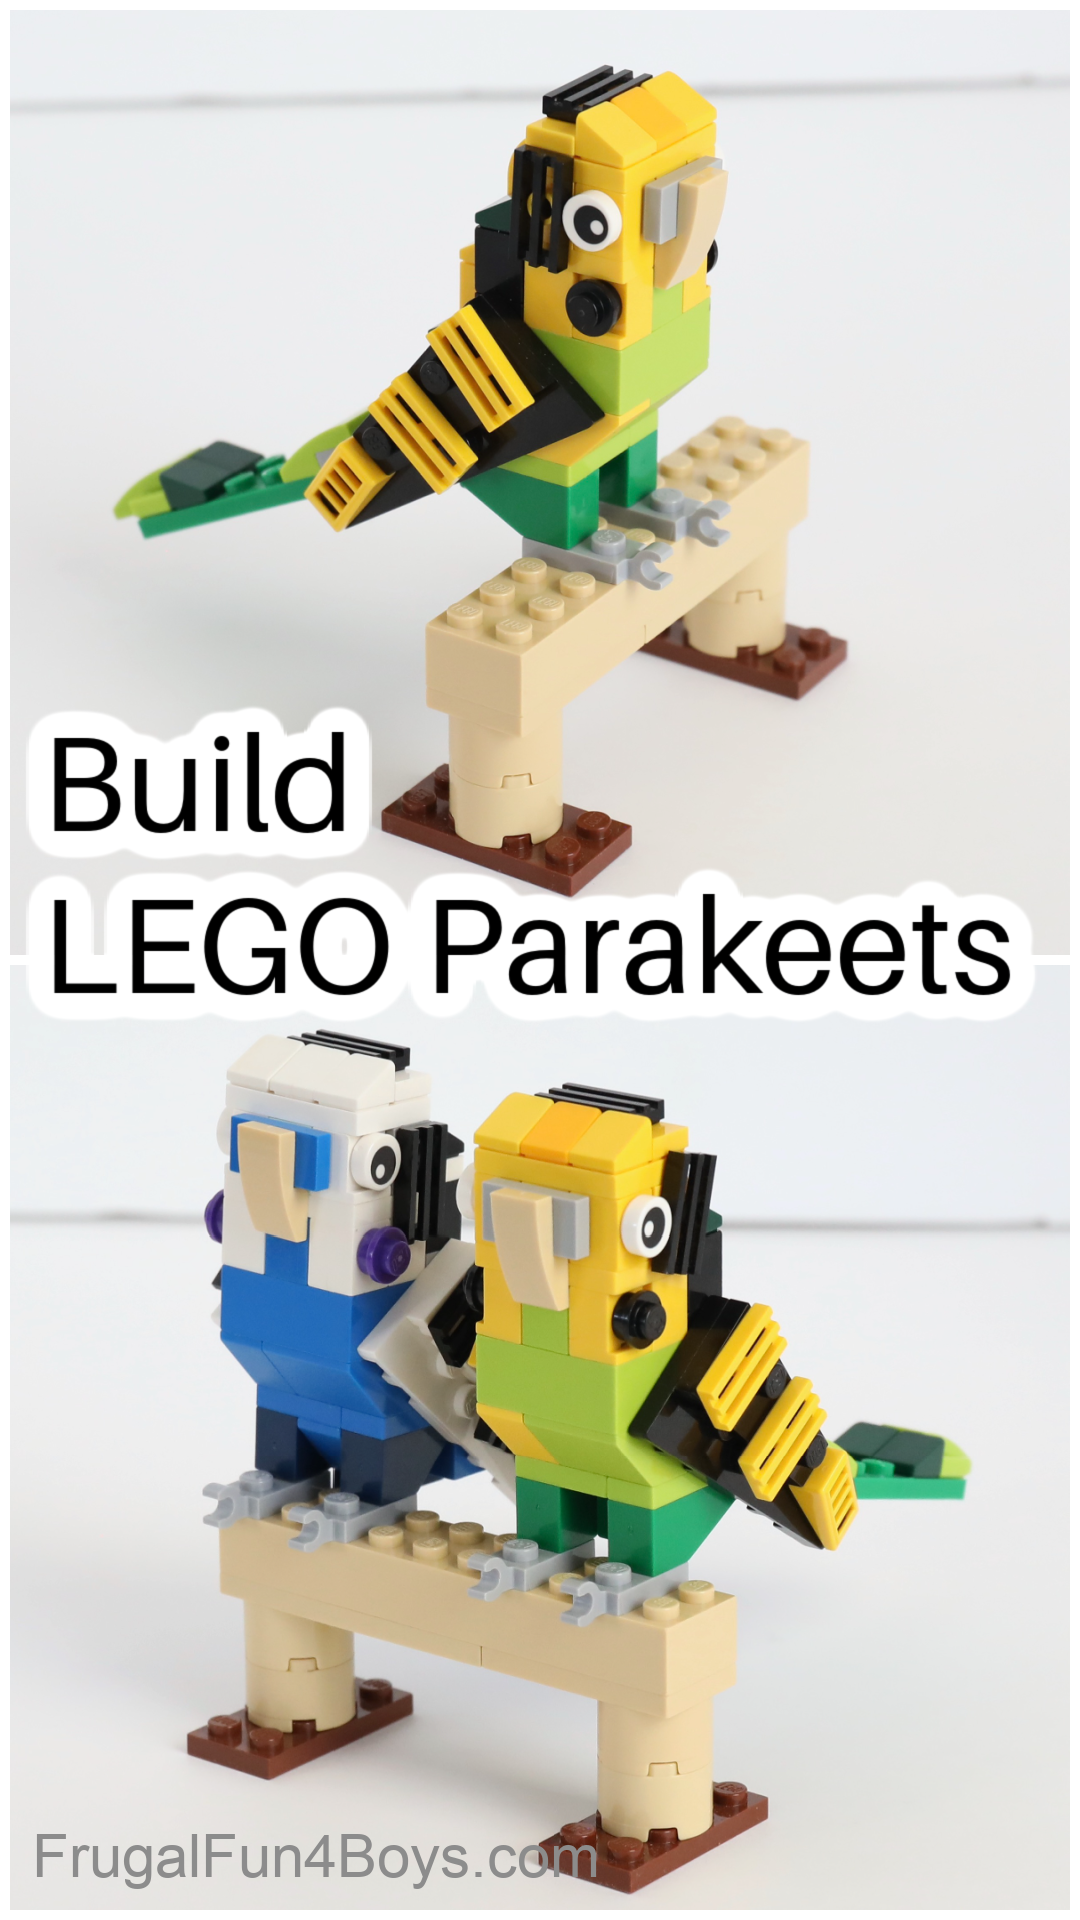 Lego-Parakeets-Pin.png